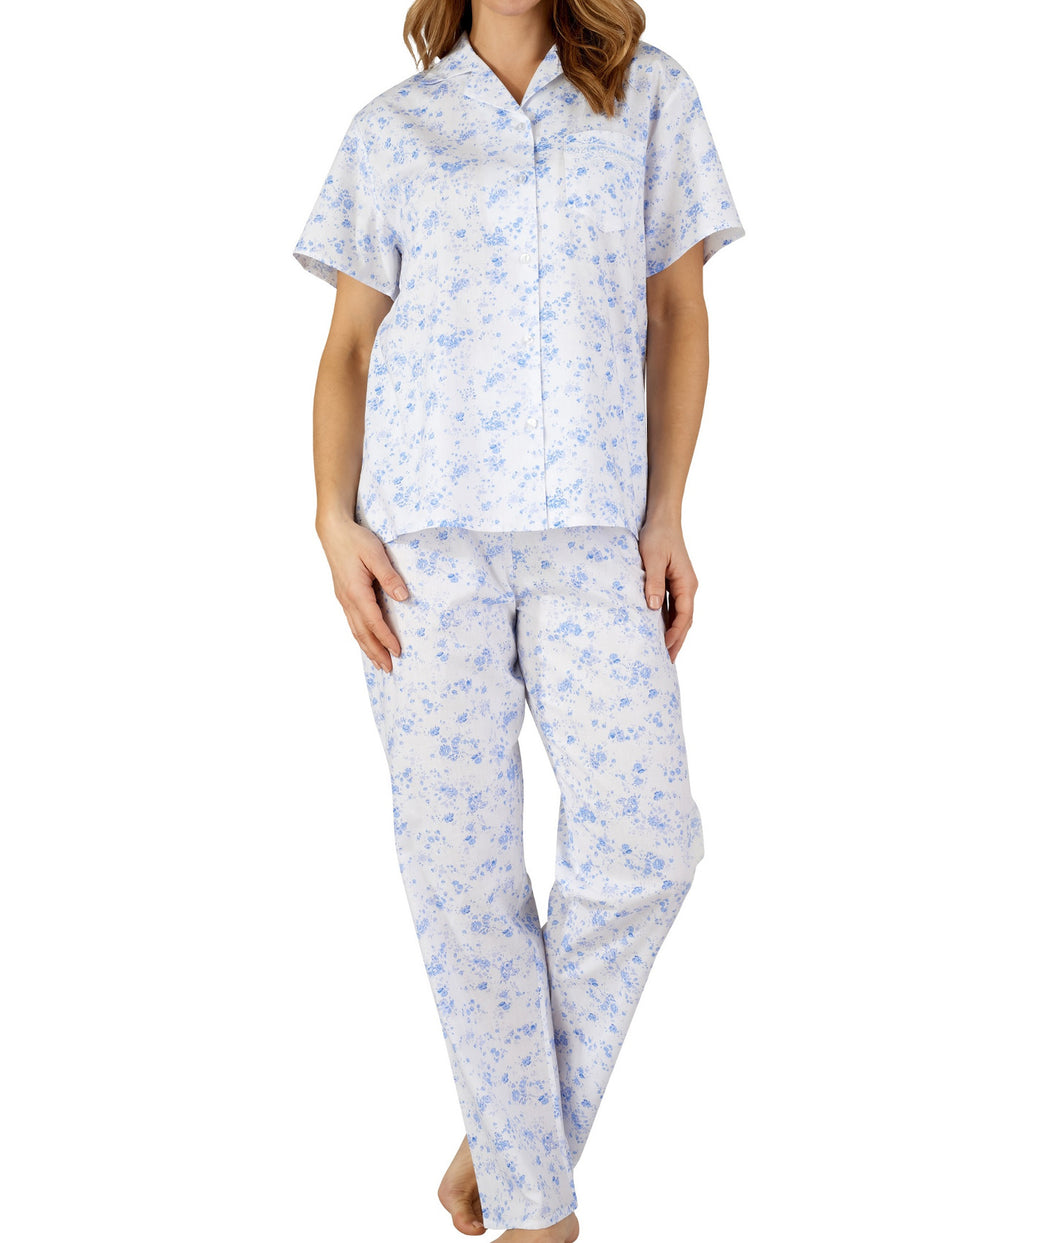 https://images.esellerpro.com/2278/I/177/563/PJ3208-slenderella-ladies-womens-floral-cotton-pyjamas-blue.jpg